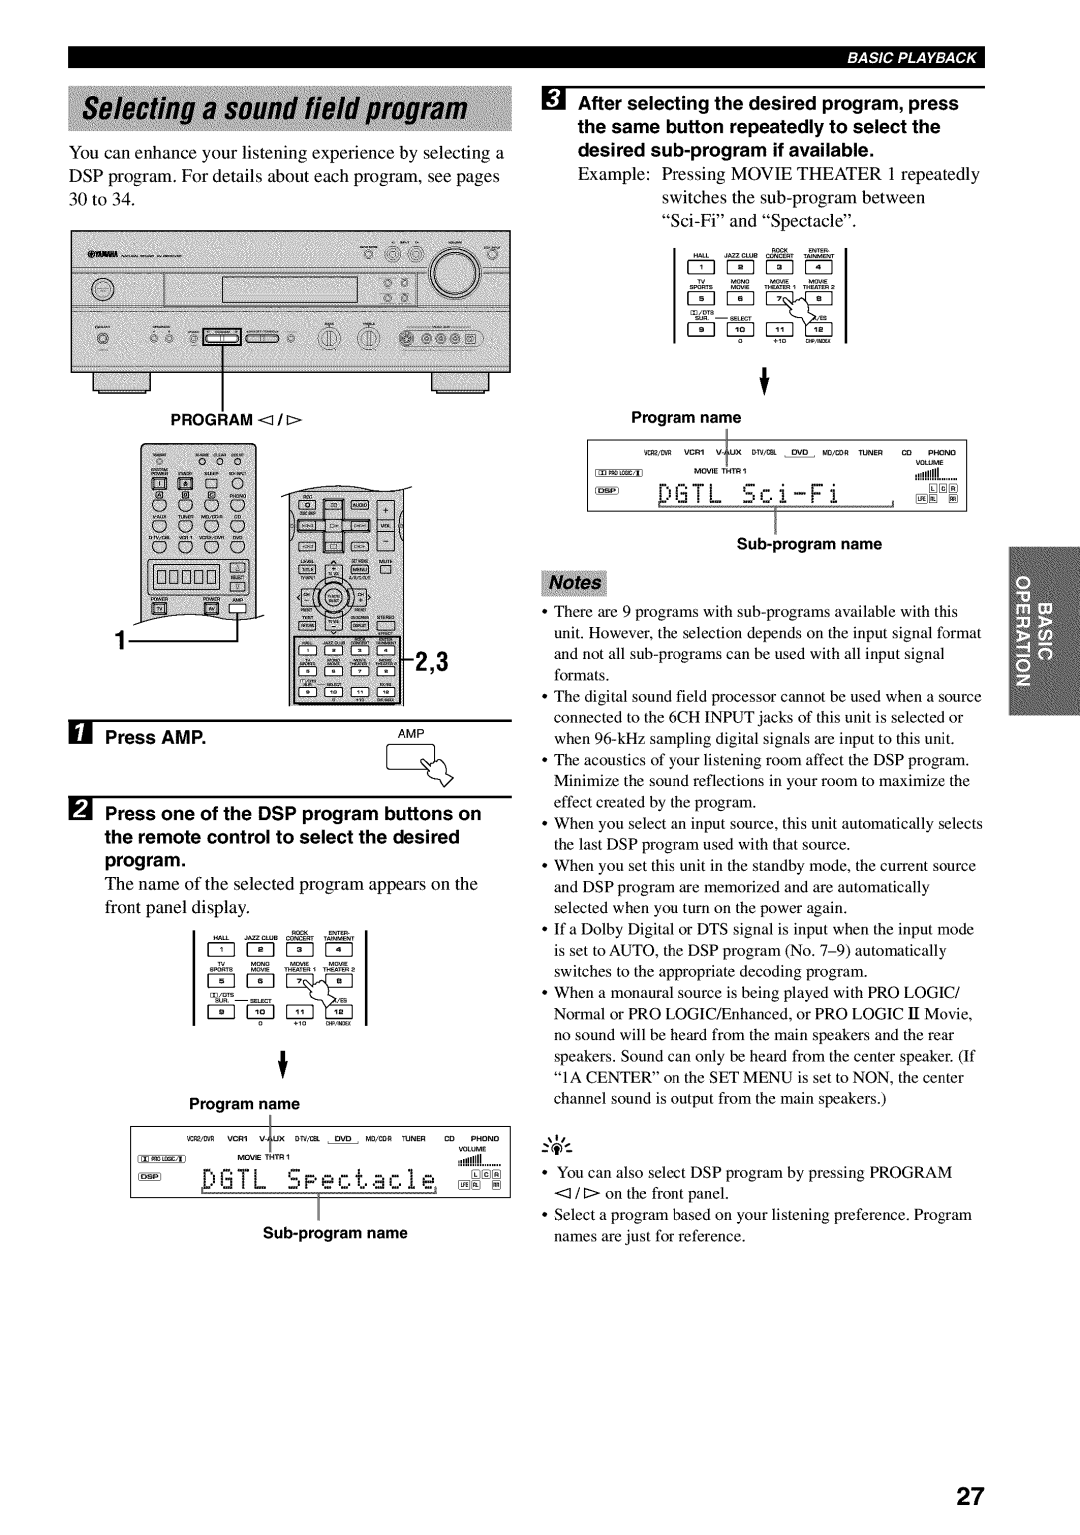 Yamaha RX-V730 owner manual GTL z-Pect.acle, _r_7, Press AMP, program 